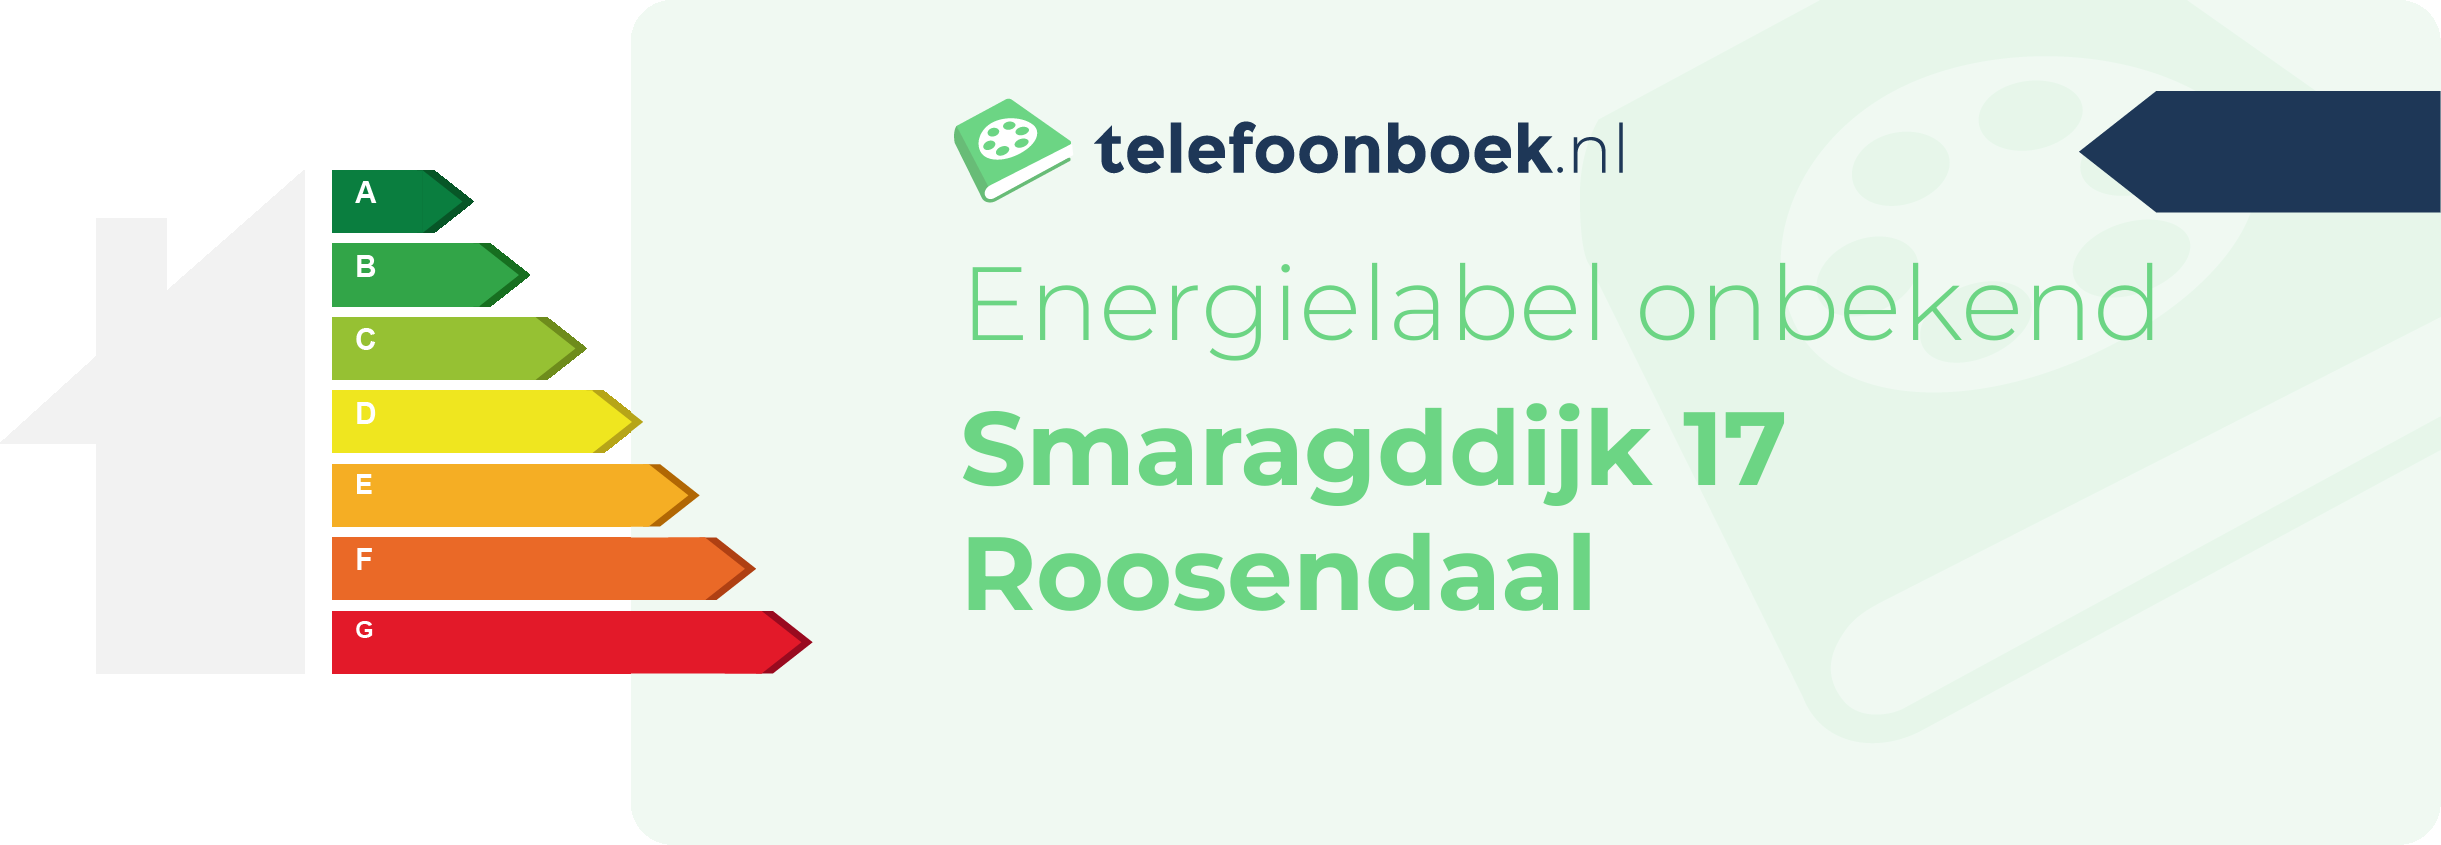 Energielabel Smaragddijk 17 Roosendaal